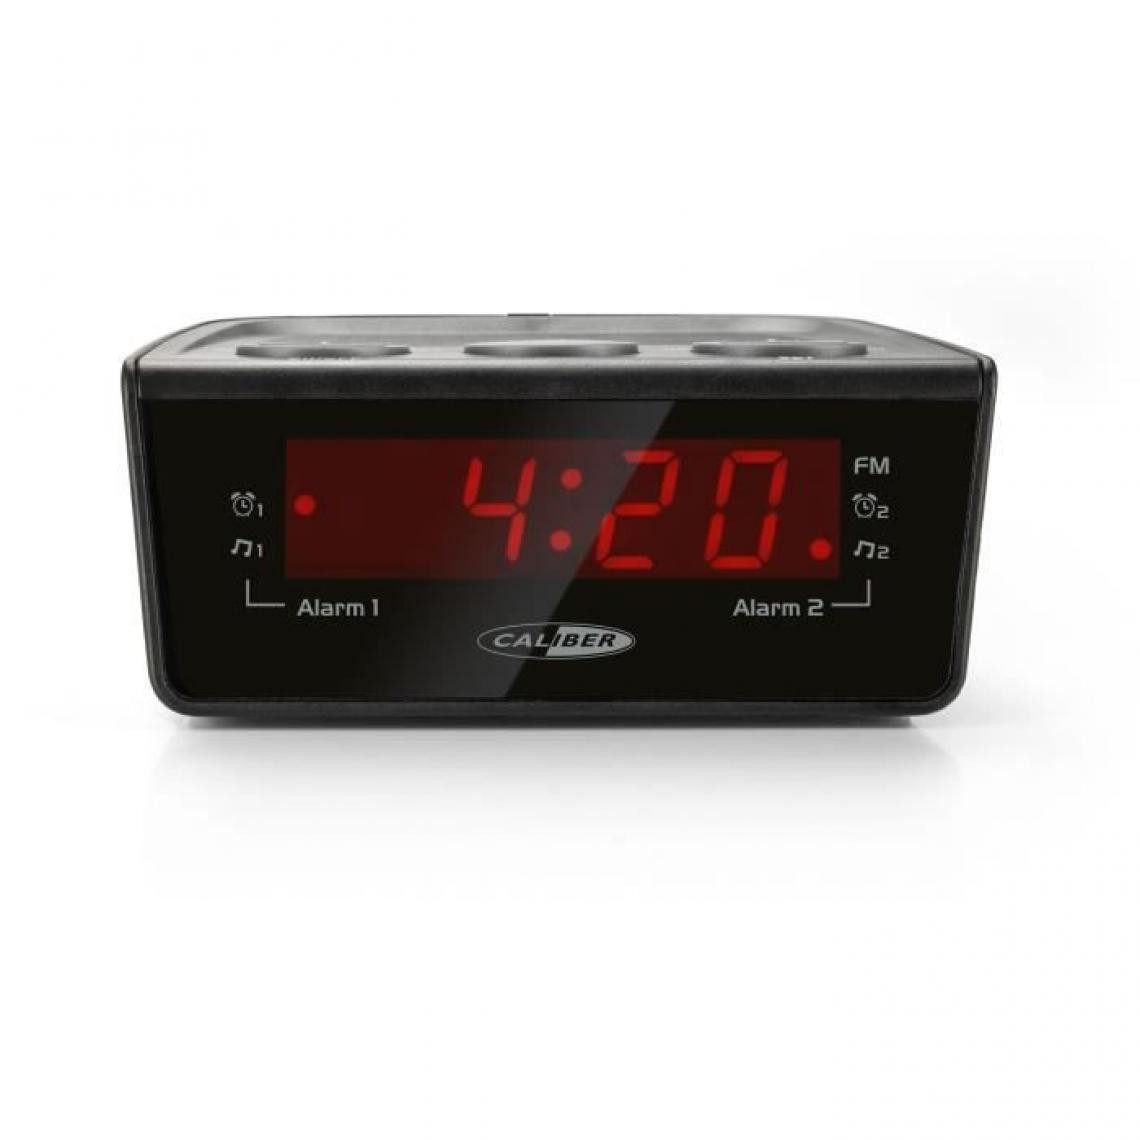 Caliber - CALIBER HCG014 - Radio réveil avec tuner FM digital et grand écran led - Alarme buzzer - USB - 10 stations préprogrammés - Noir - Radio